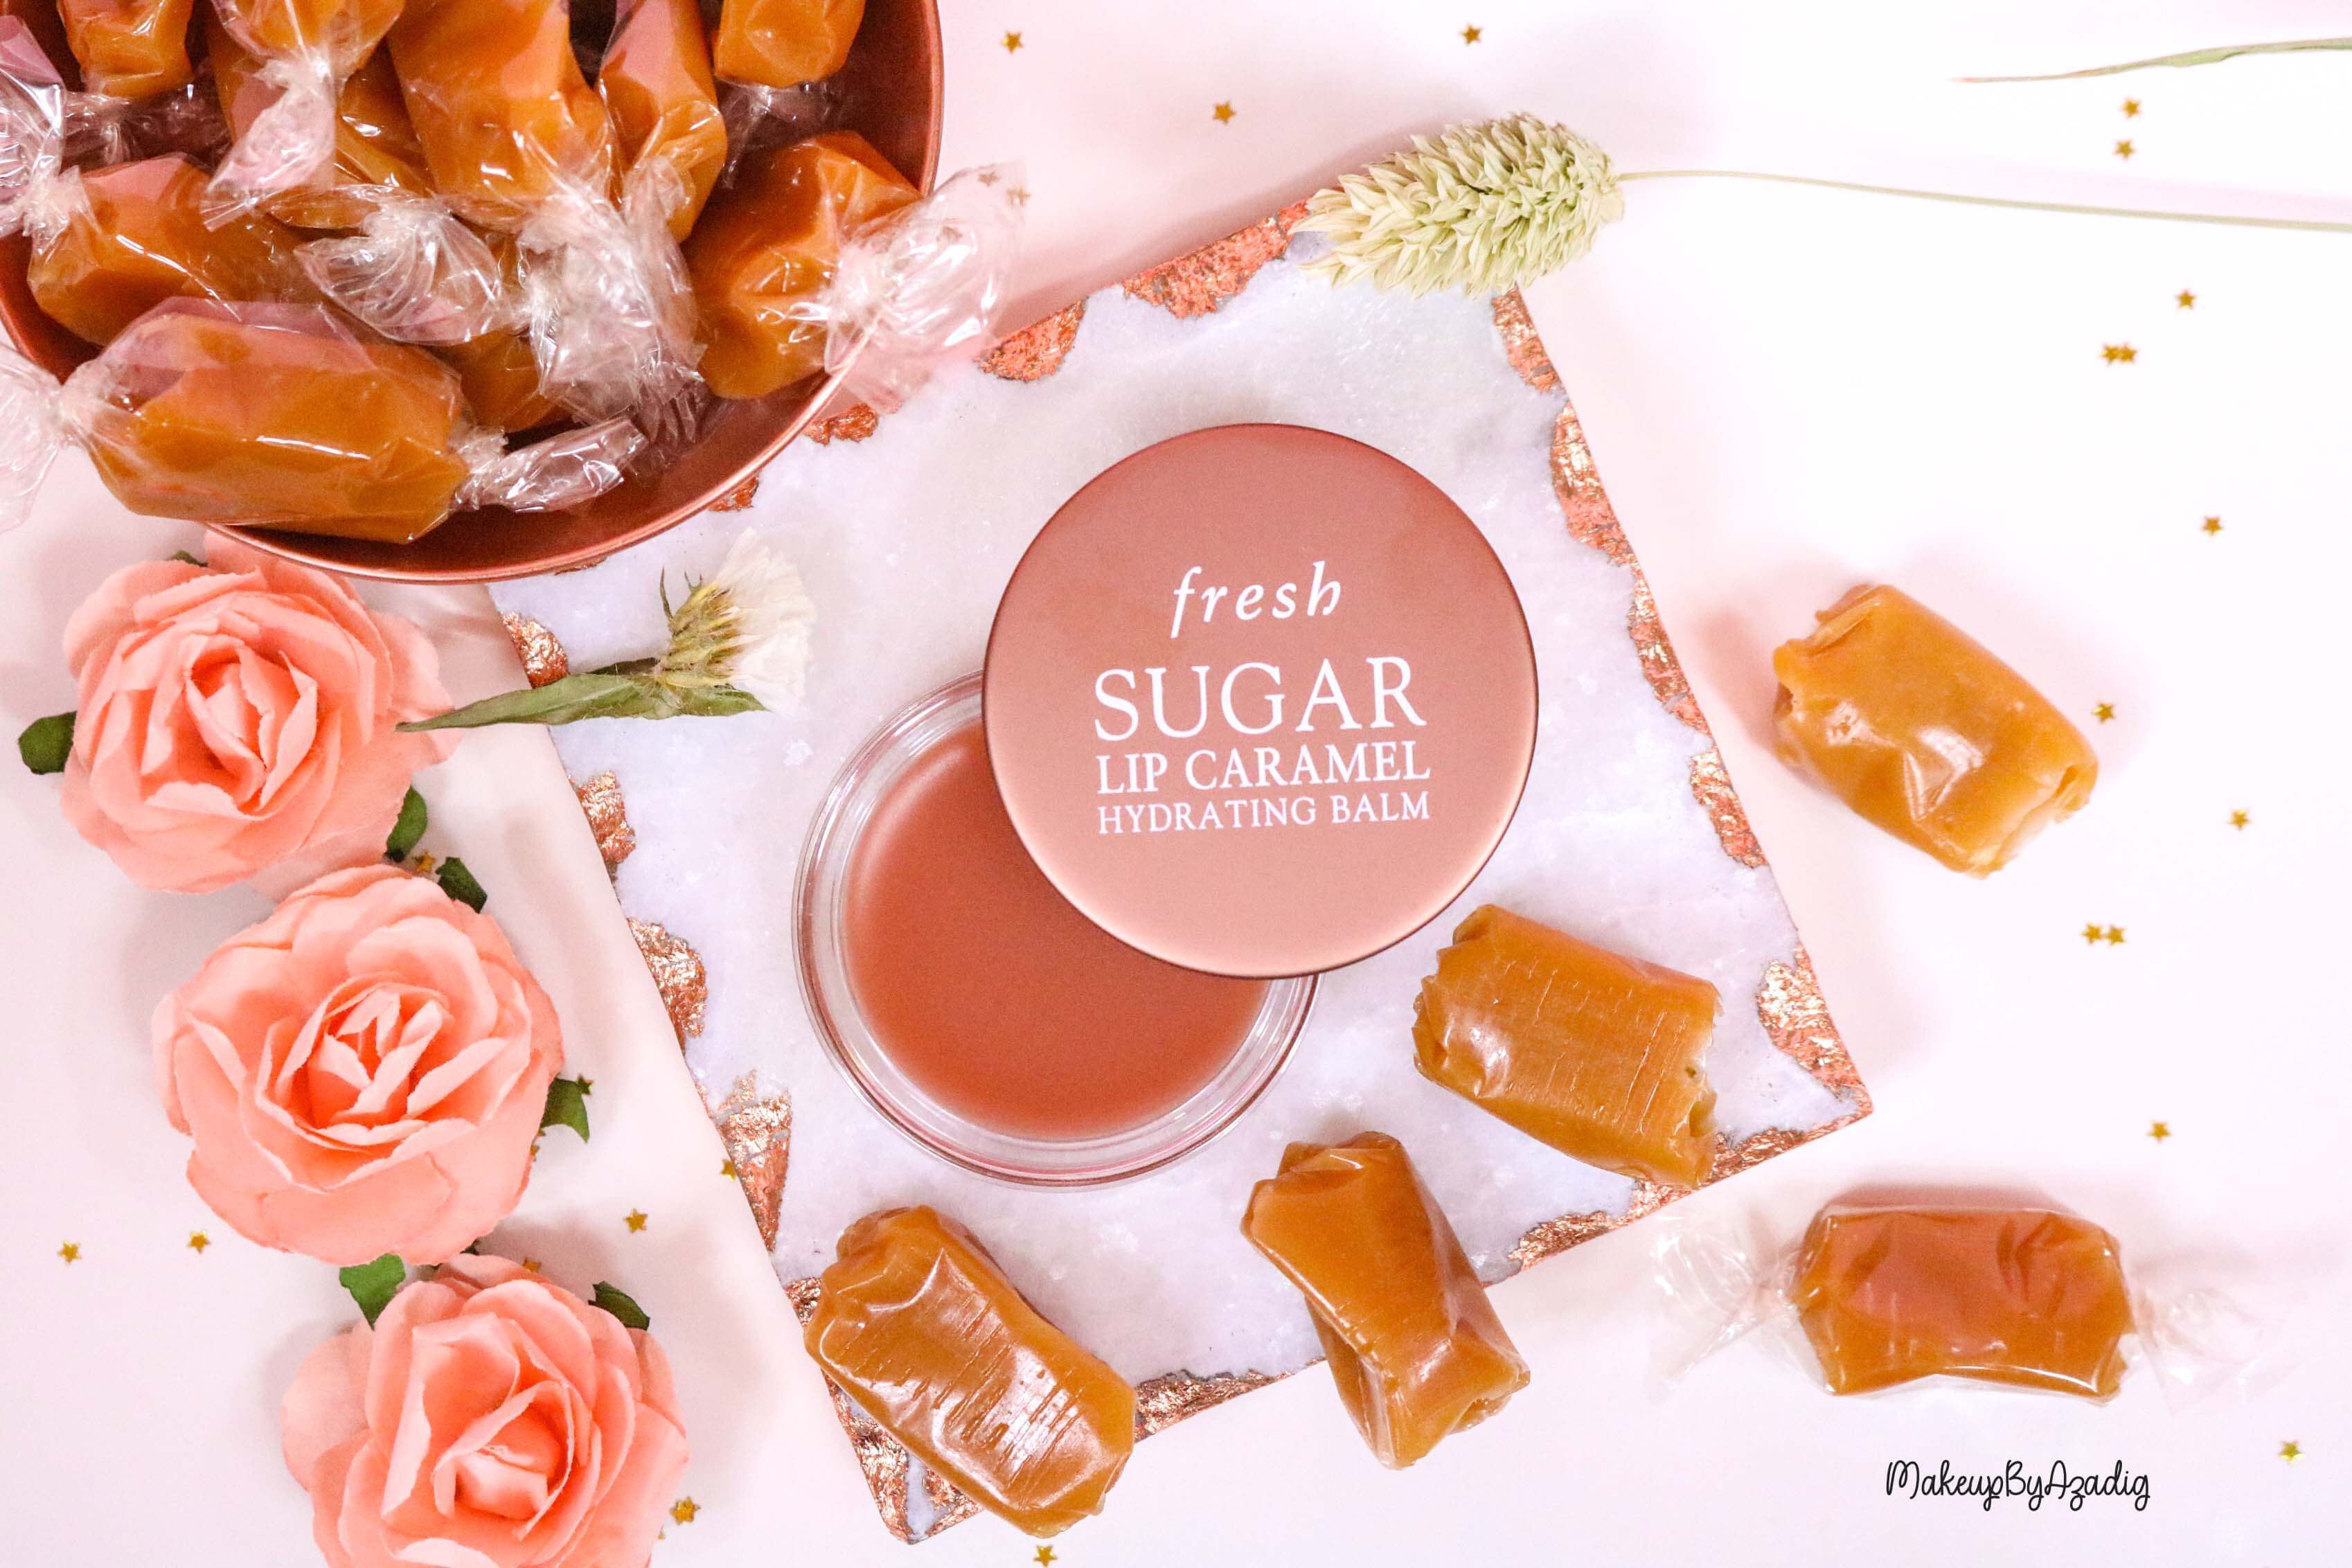 revue-baume-sucre-fresh-beauty-skincare-caramel-sugar-lip-caramel-sephora-makeupbyazadig-avis-prix-balm-food